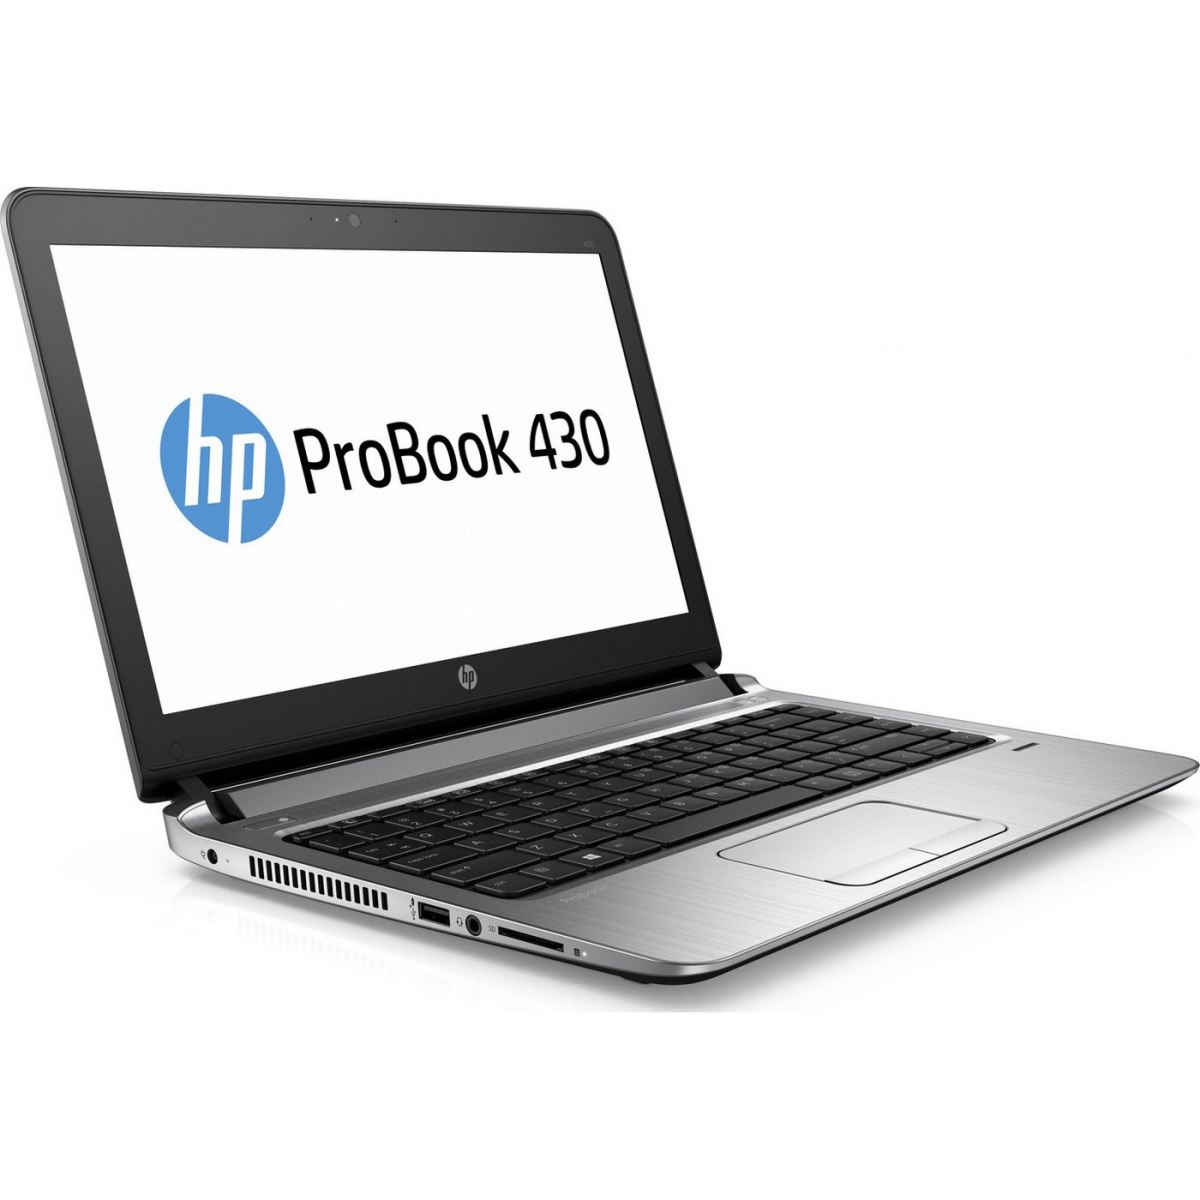 Laptop HP ProBook 430 G3, 13.3 inch, Intel Core i5-6200U, RAM 8GB, SSD 256GB, Windows 10 Pro 64 / Win 7 64